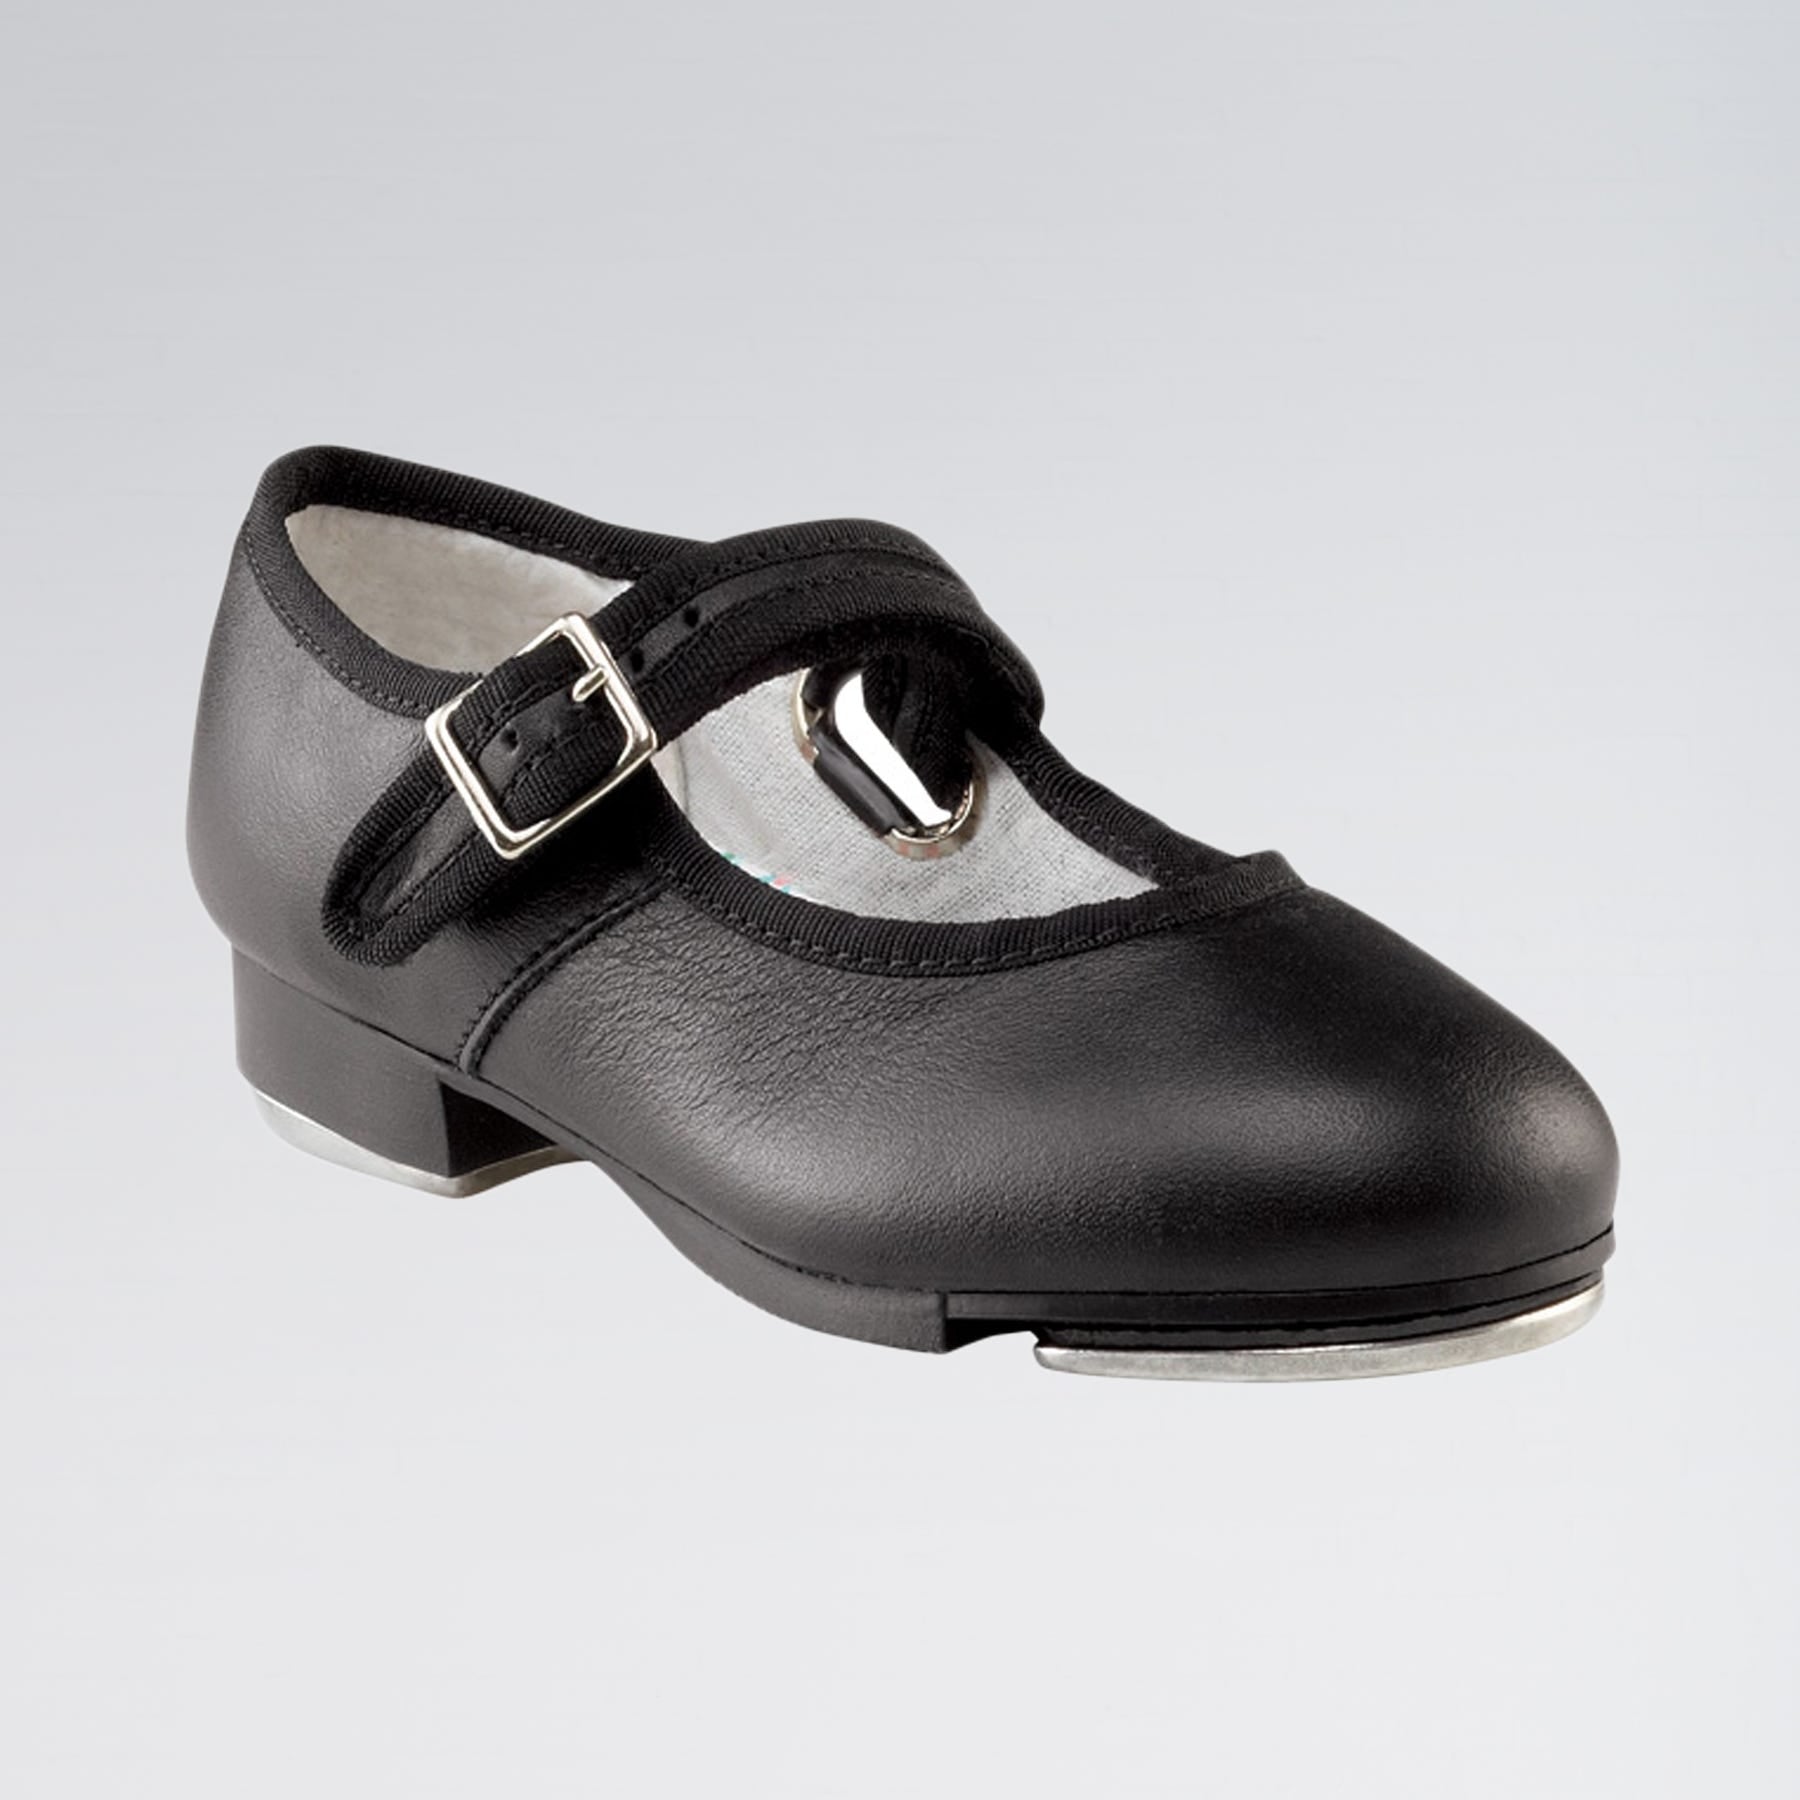 Capezio Mary Jane Leather Tap Shoe